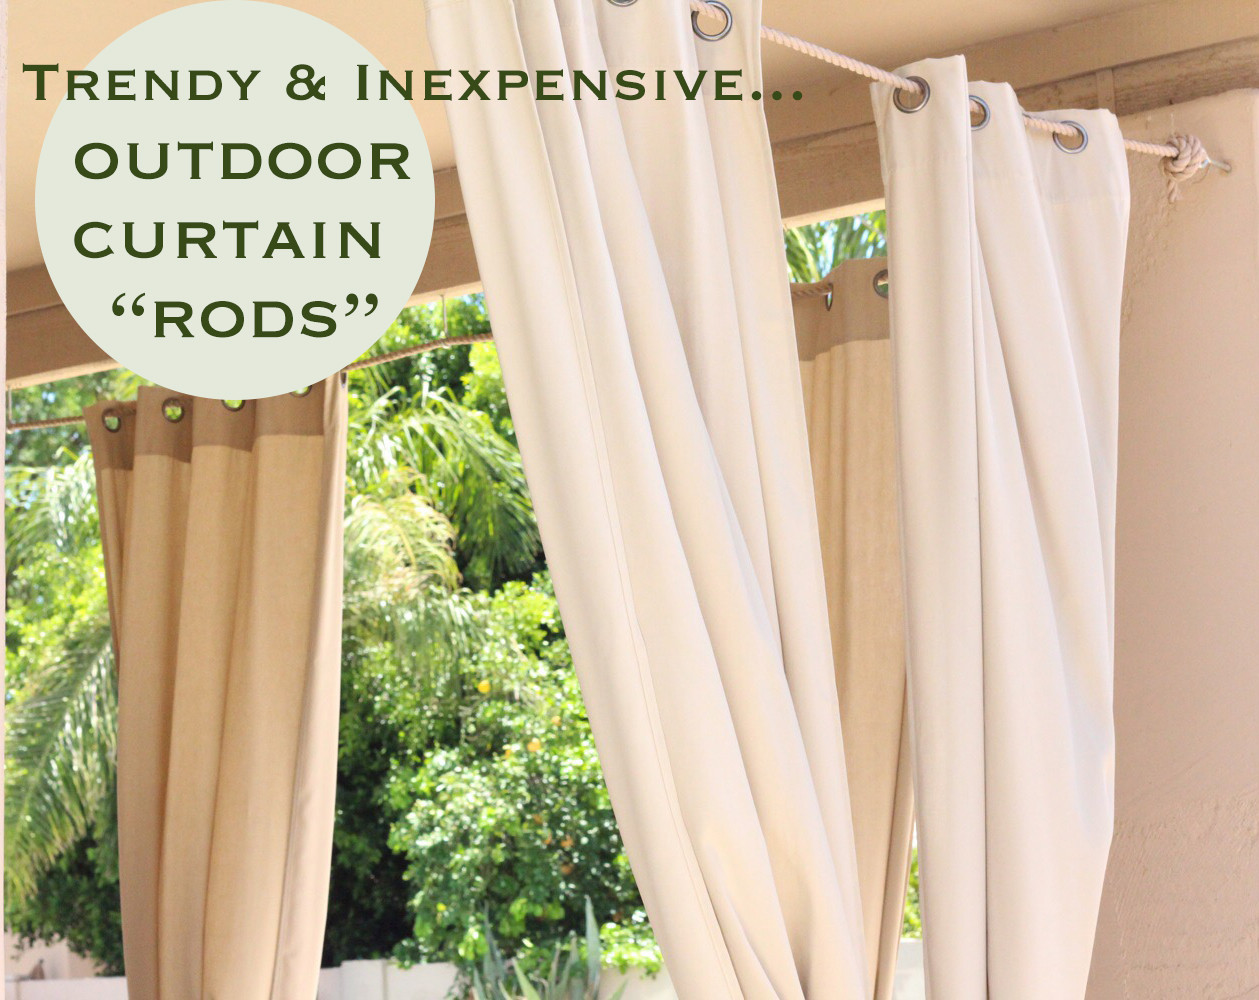 DIY Outdoor Curtain Rod
 Trendy & Inexpensive Outdoor Curtain "Rods" Retro